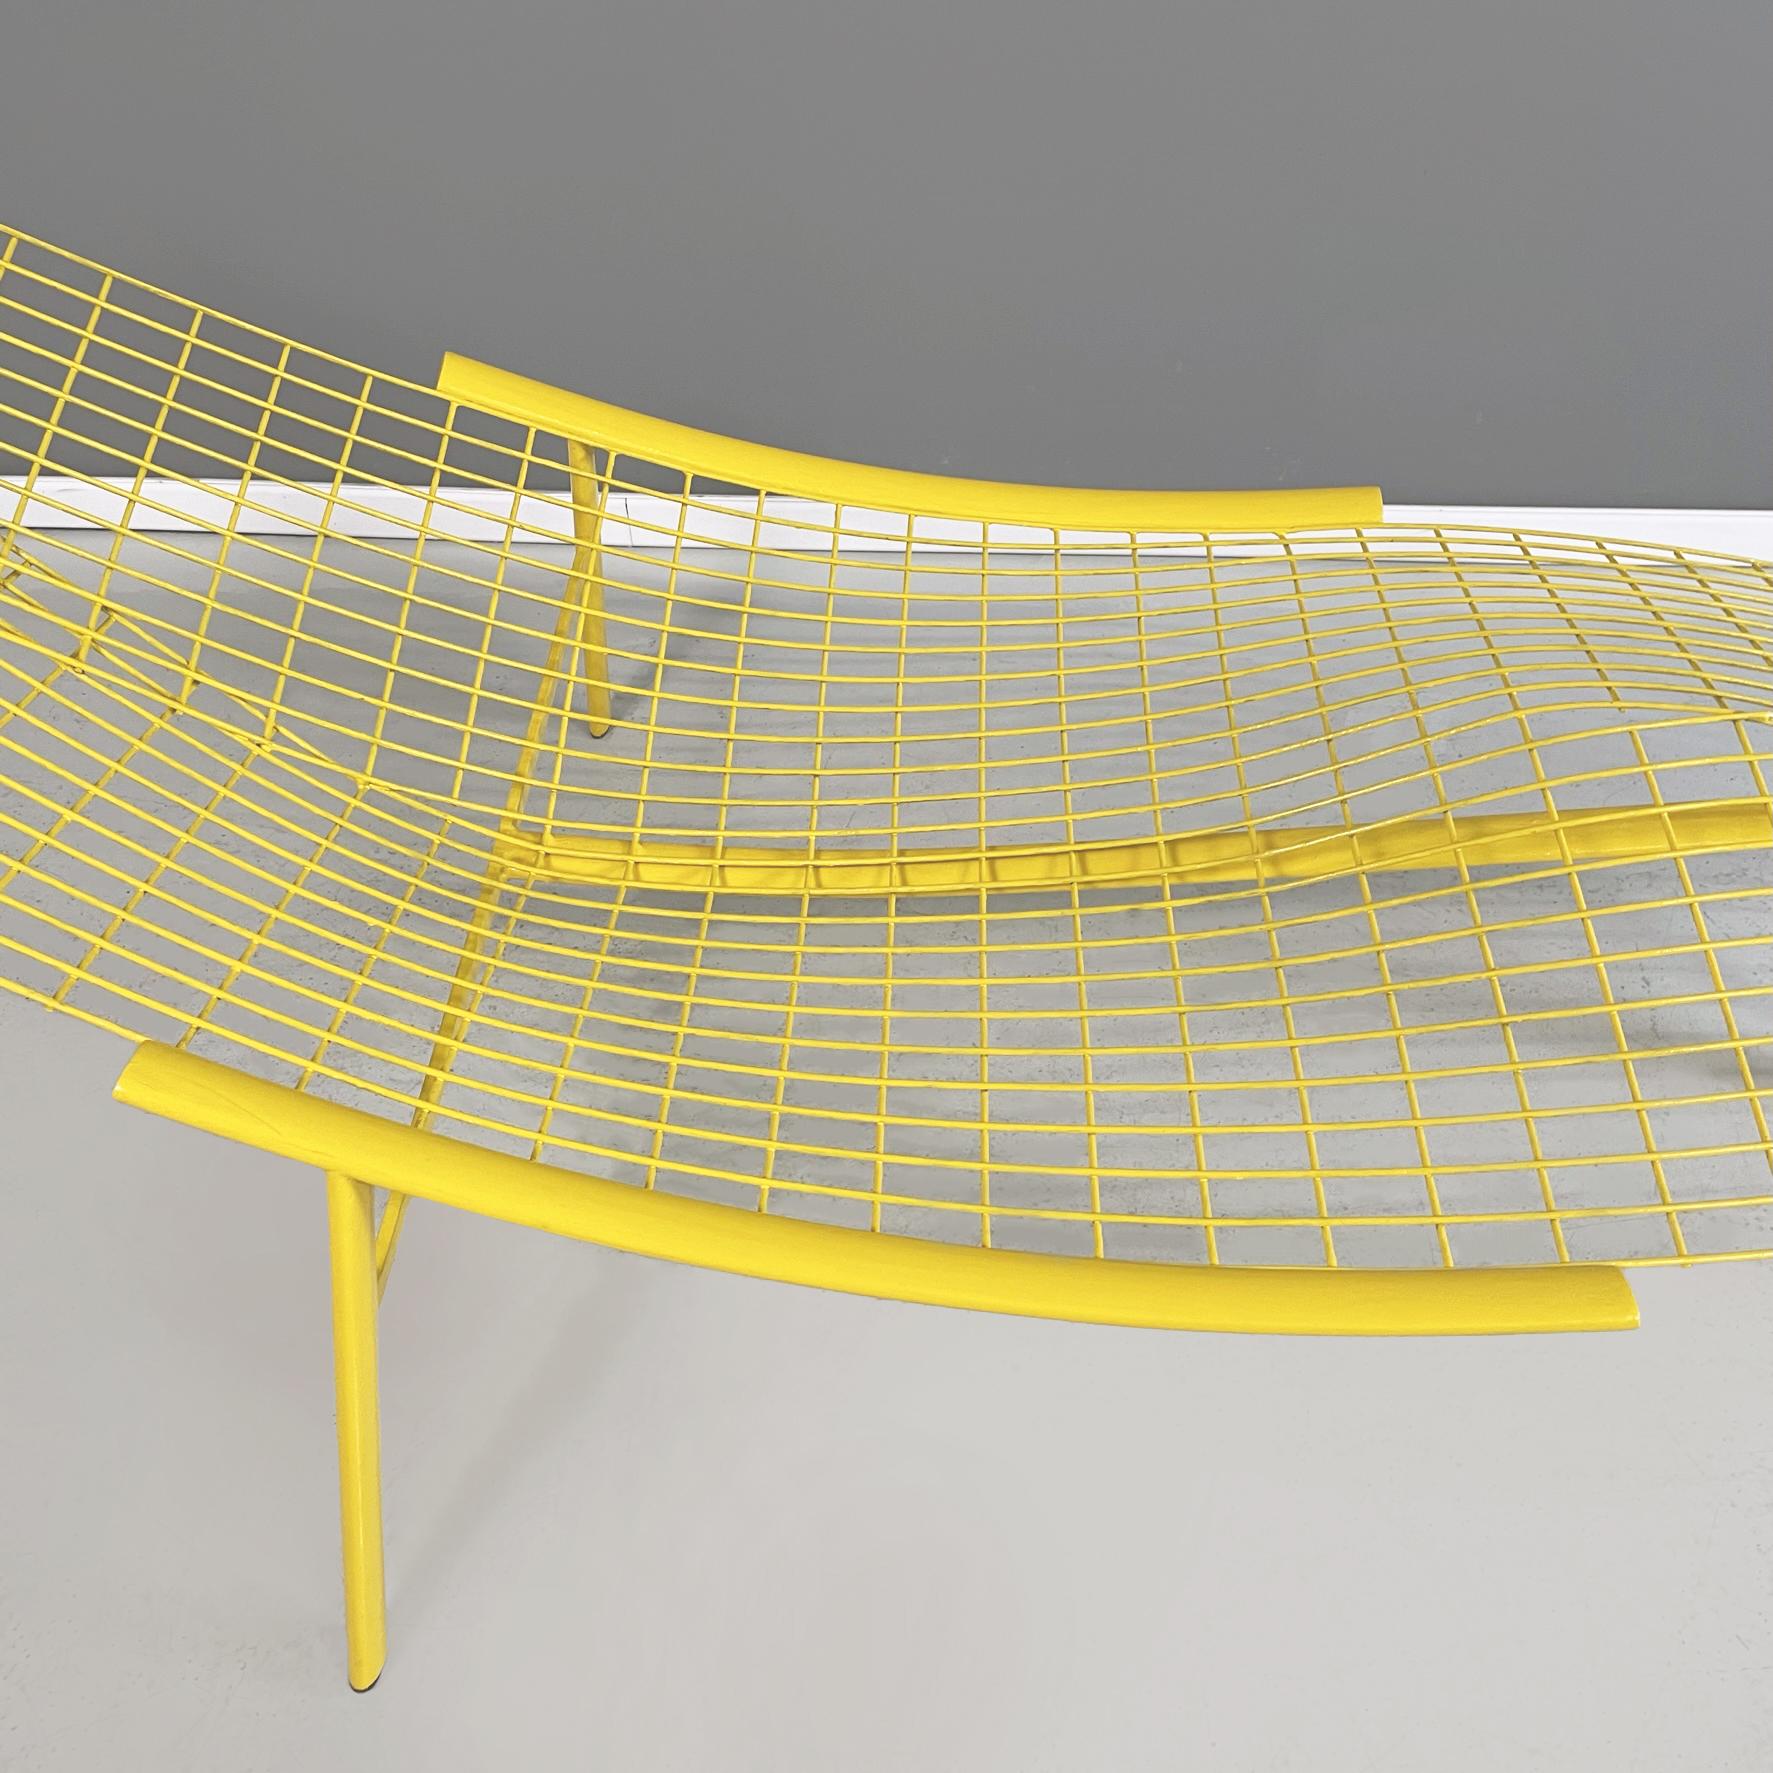 Italian modern Yellow metal Deck chair Swing Rete by Offredi for Saporiti, 1980s For Sale 1